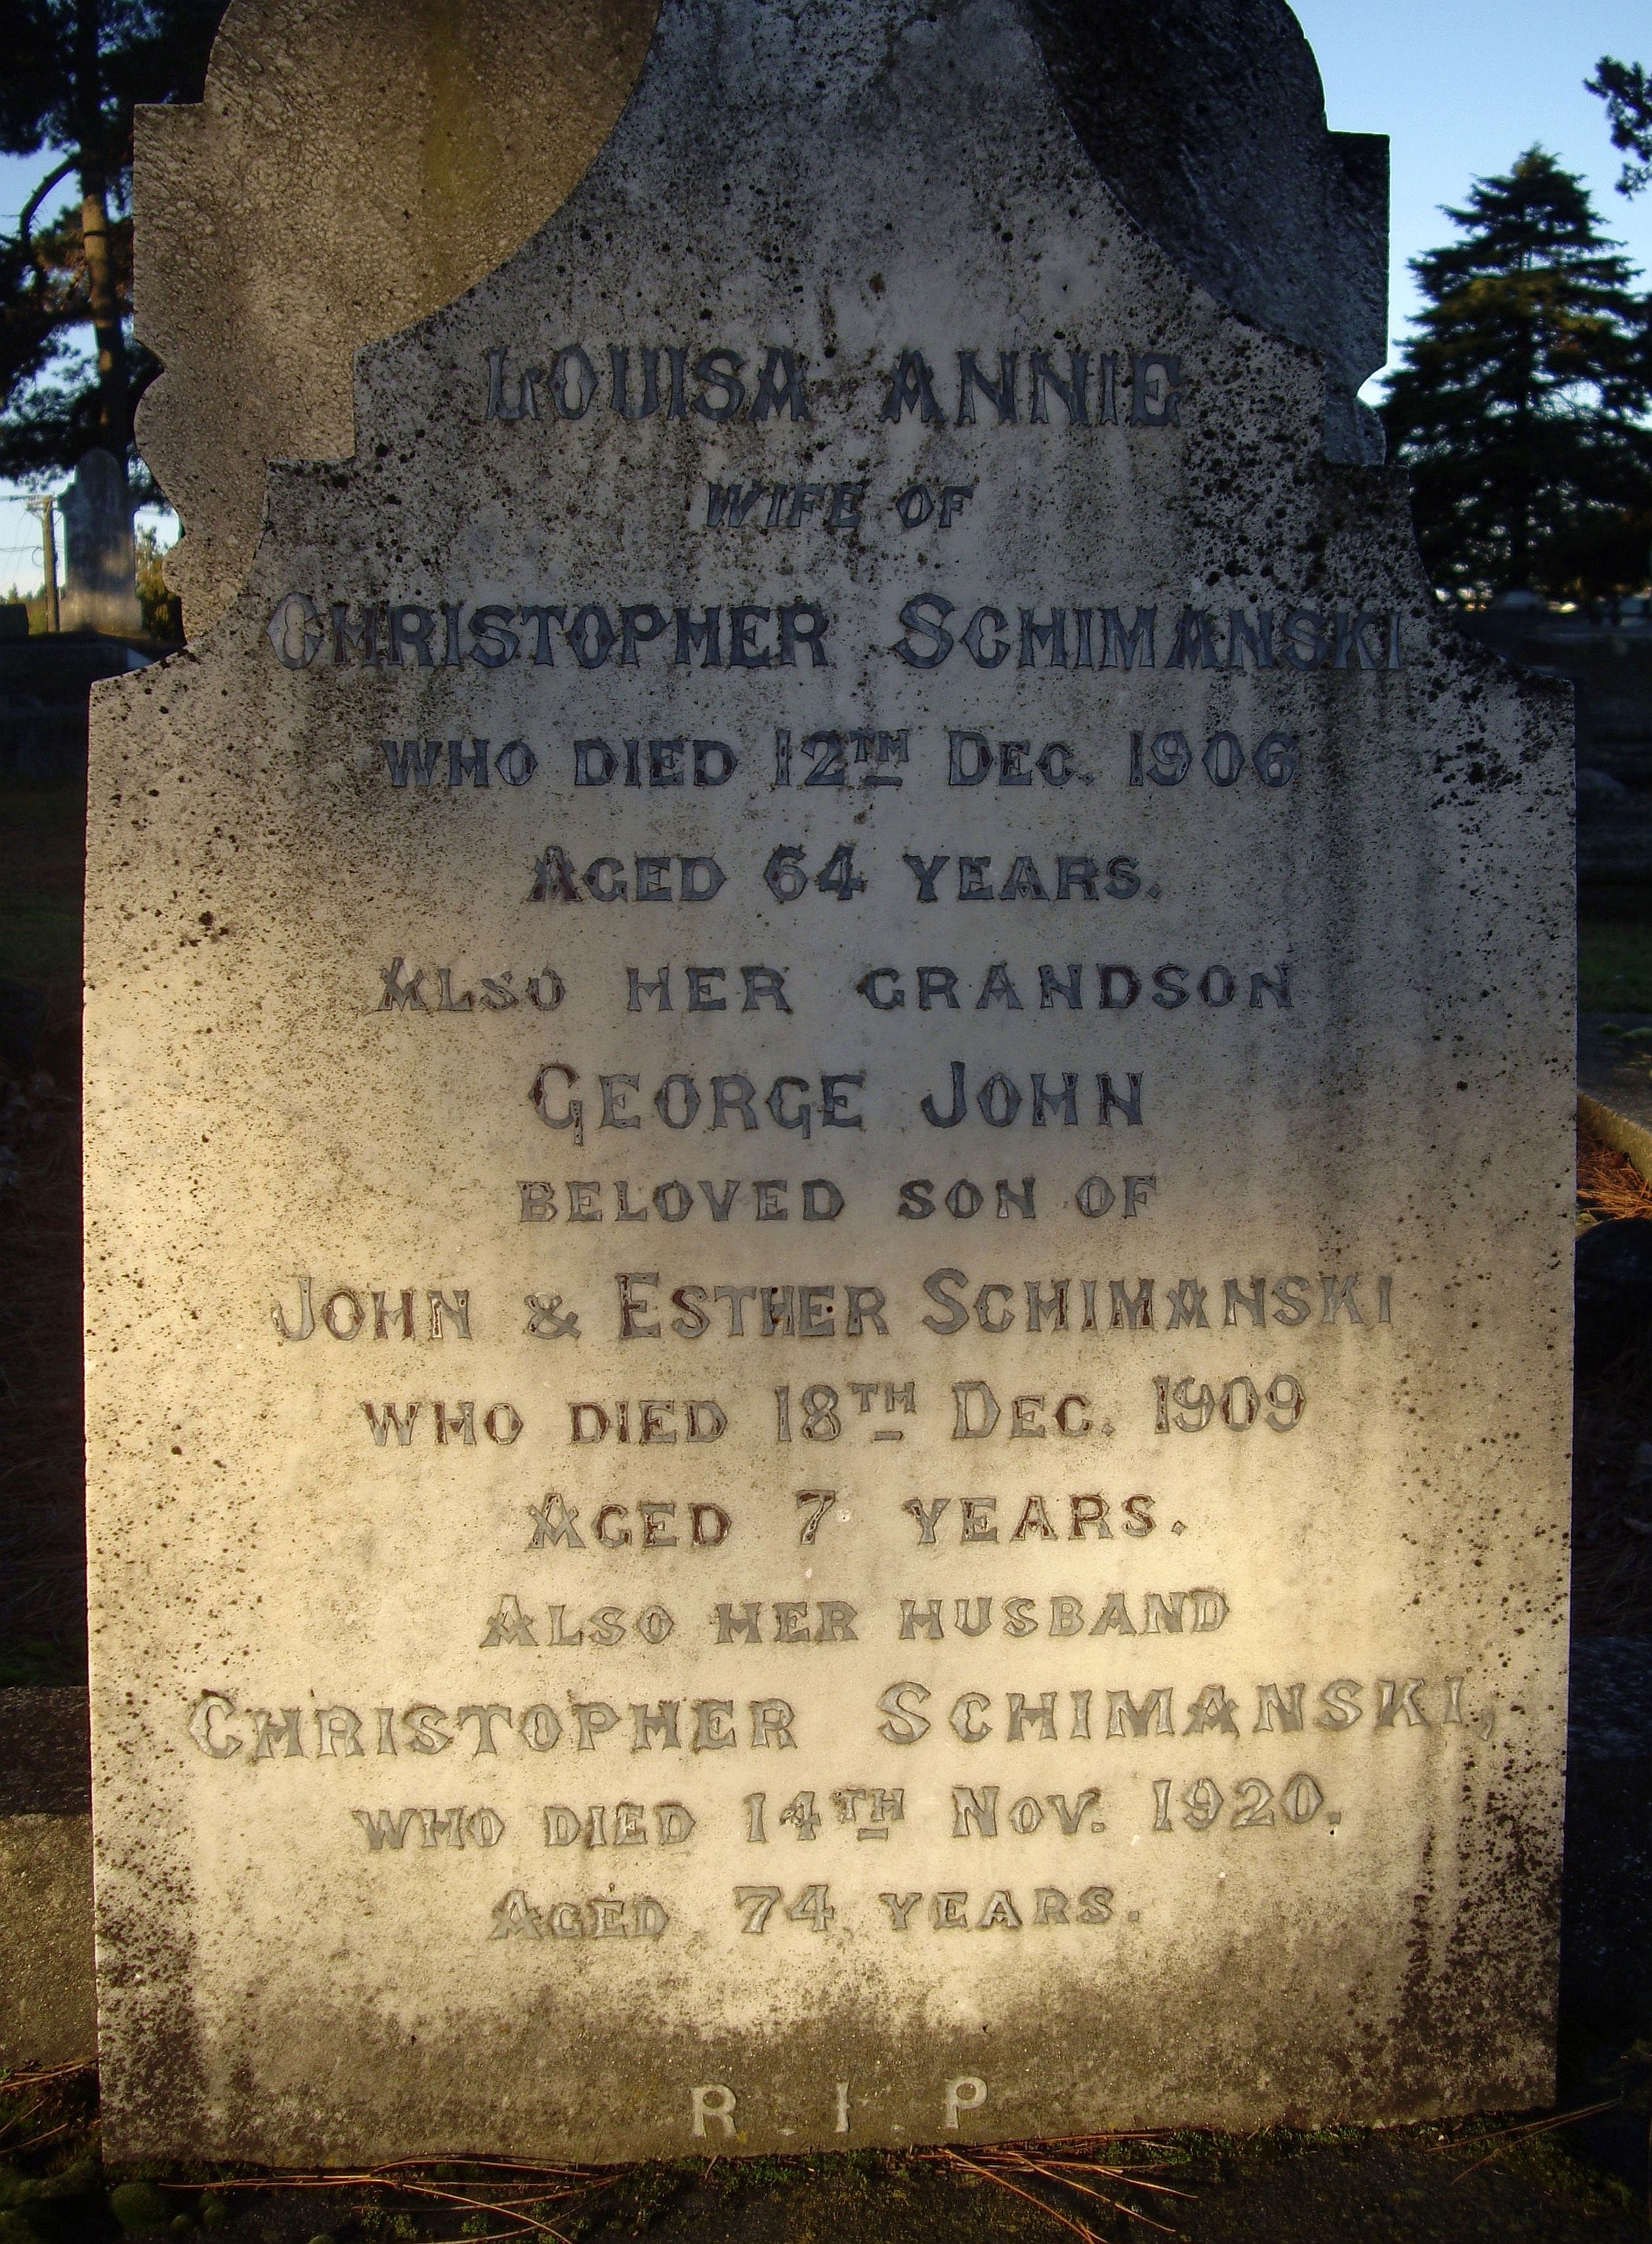 Headstone of  
Christopher and Louisa Schimanski, Linwood cemetery